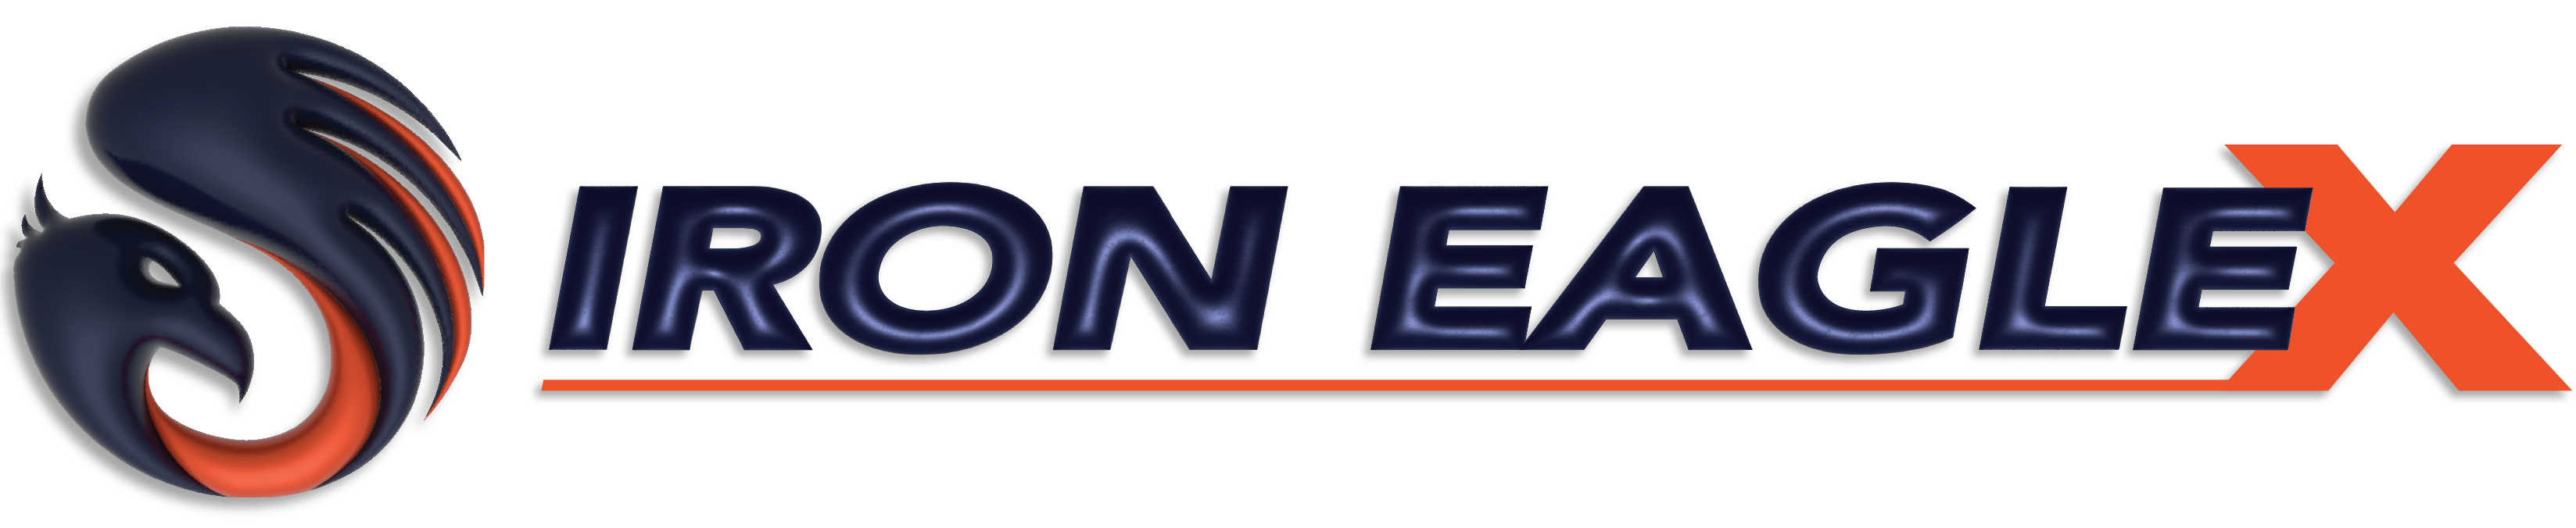 Iron Eagle logo